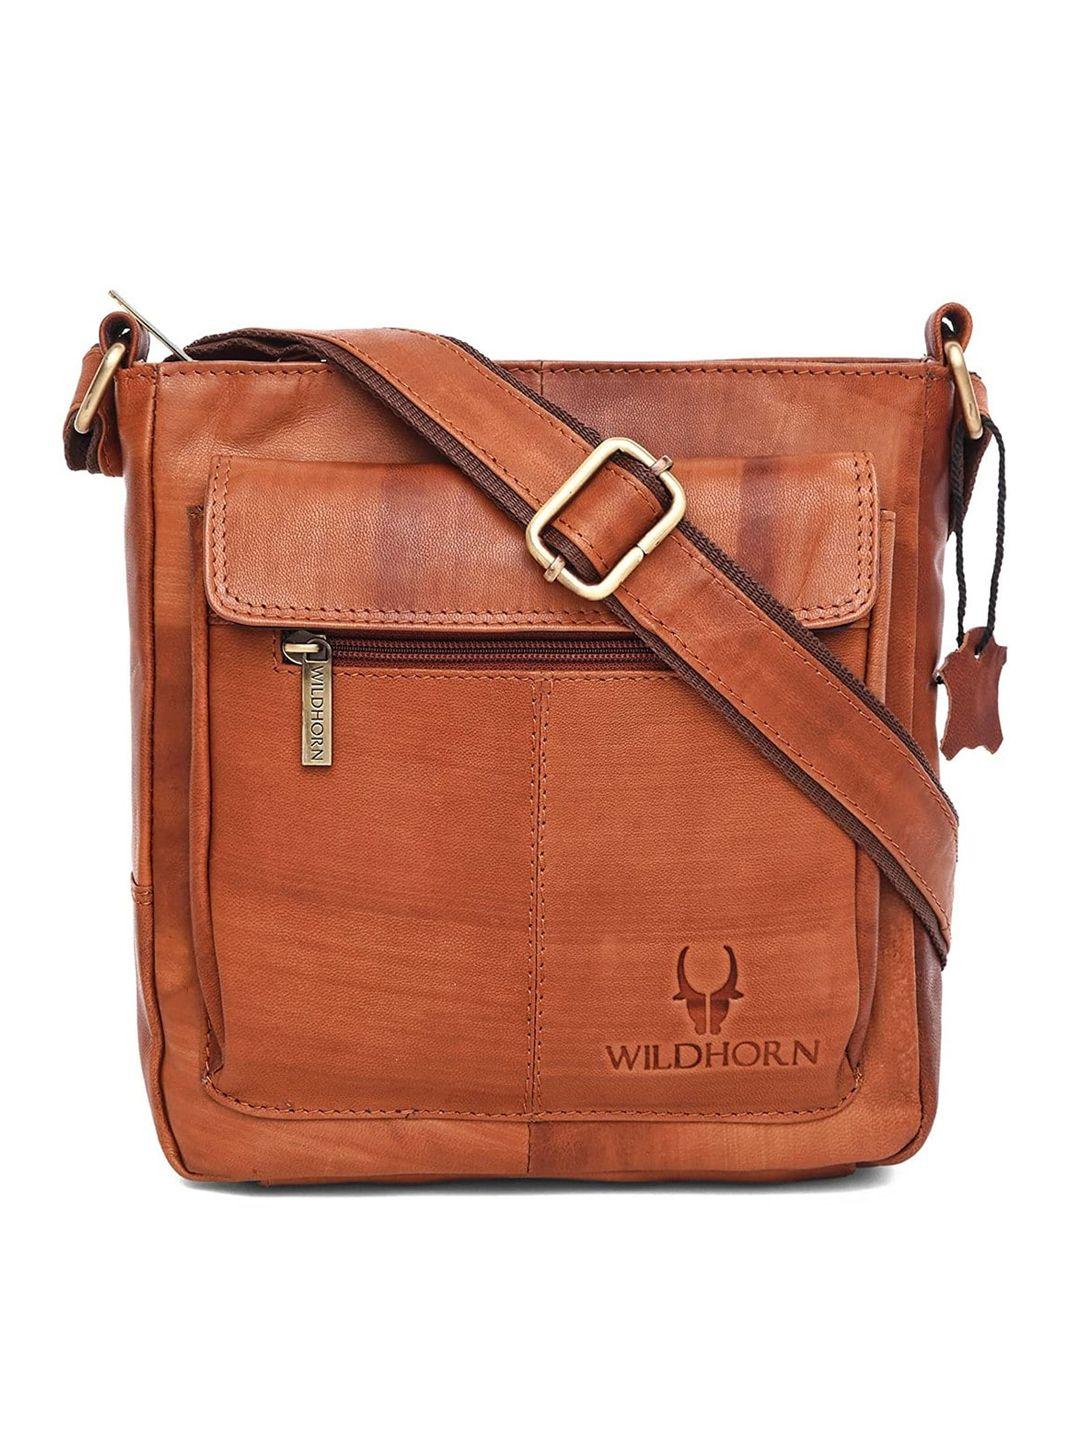 wildhorn tan brown leather shopper sling bag